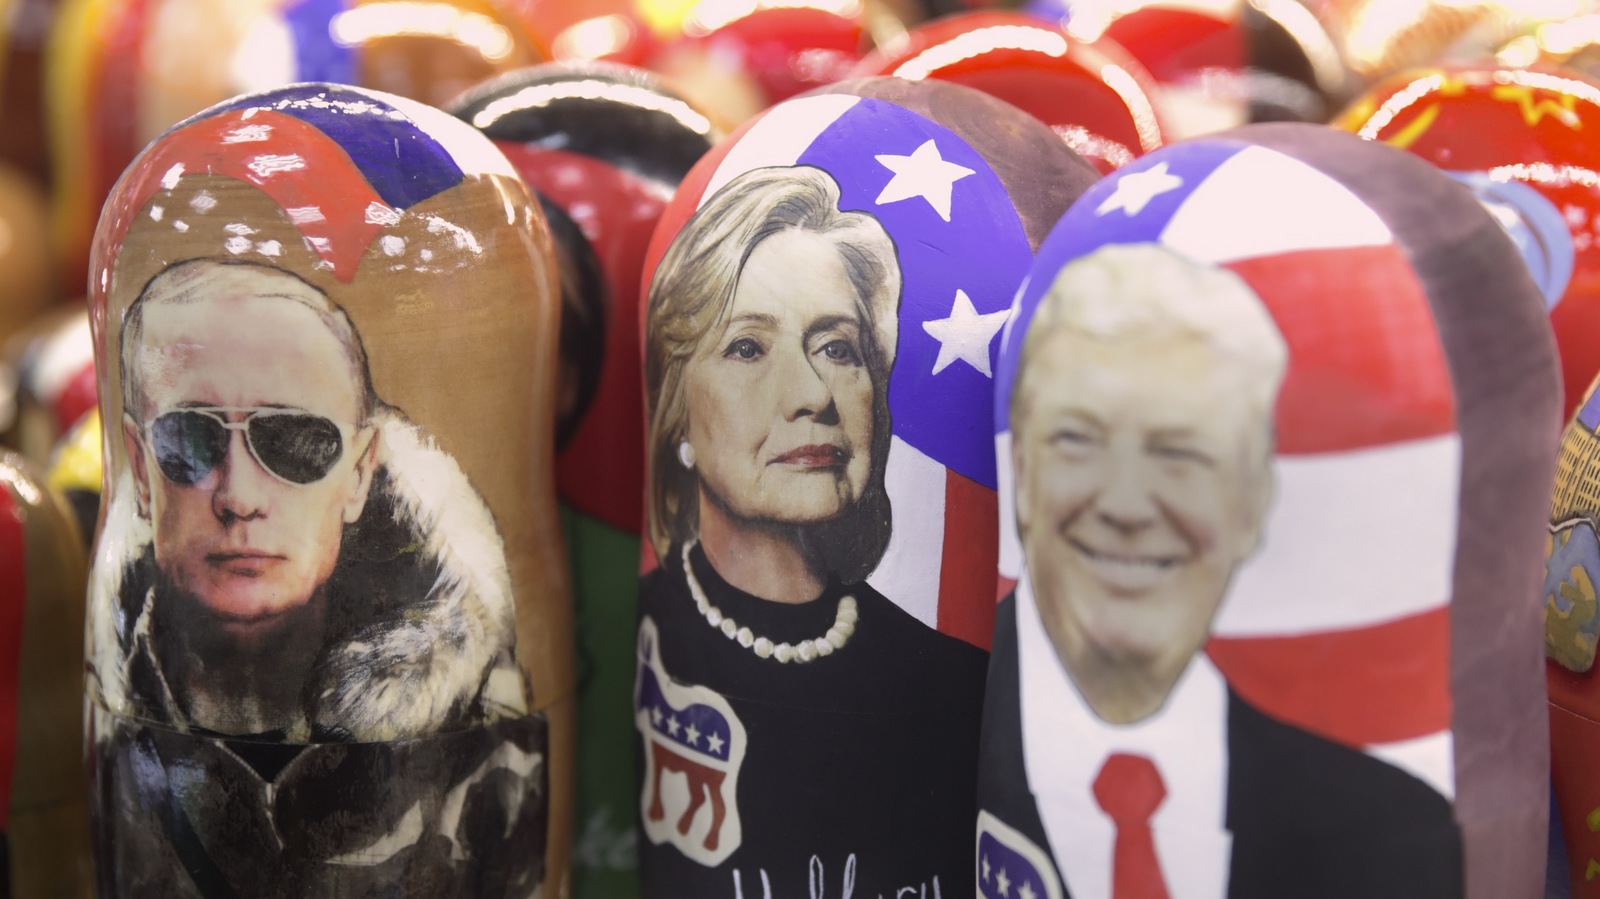 Traditional Russian Matreskas depicting Vladimir Putin, Hillary Clinton and Donald Trump displayed in a shop in Moscow. Nov. 8, 2016. (AP/Pavel Golovkin)